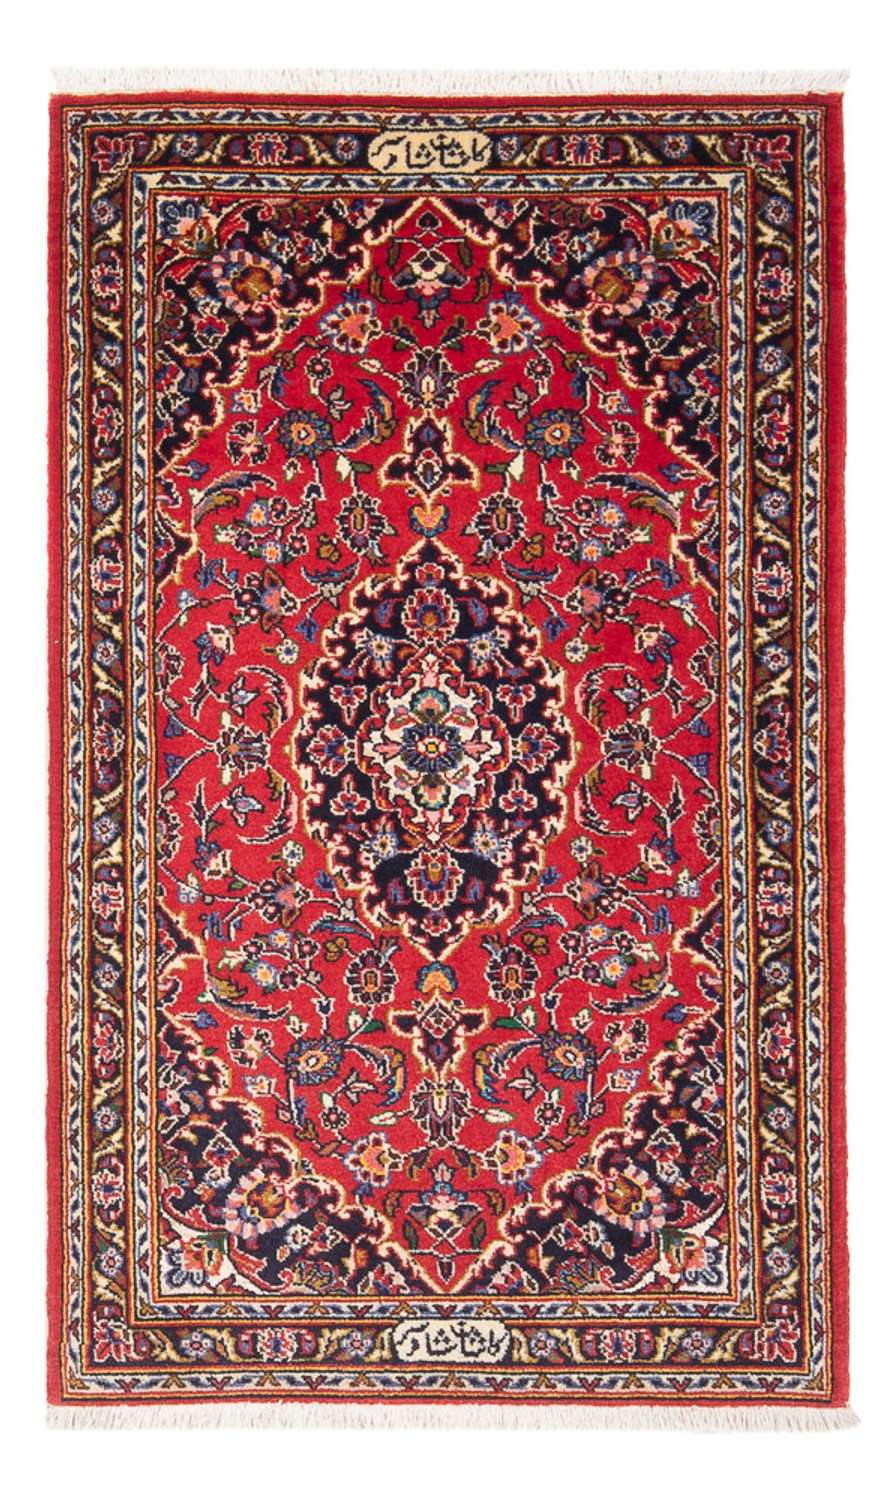 Tapis persan - Keshan - 127 x 67 cm - rouge